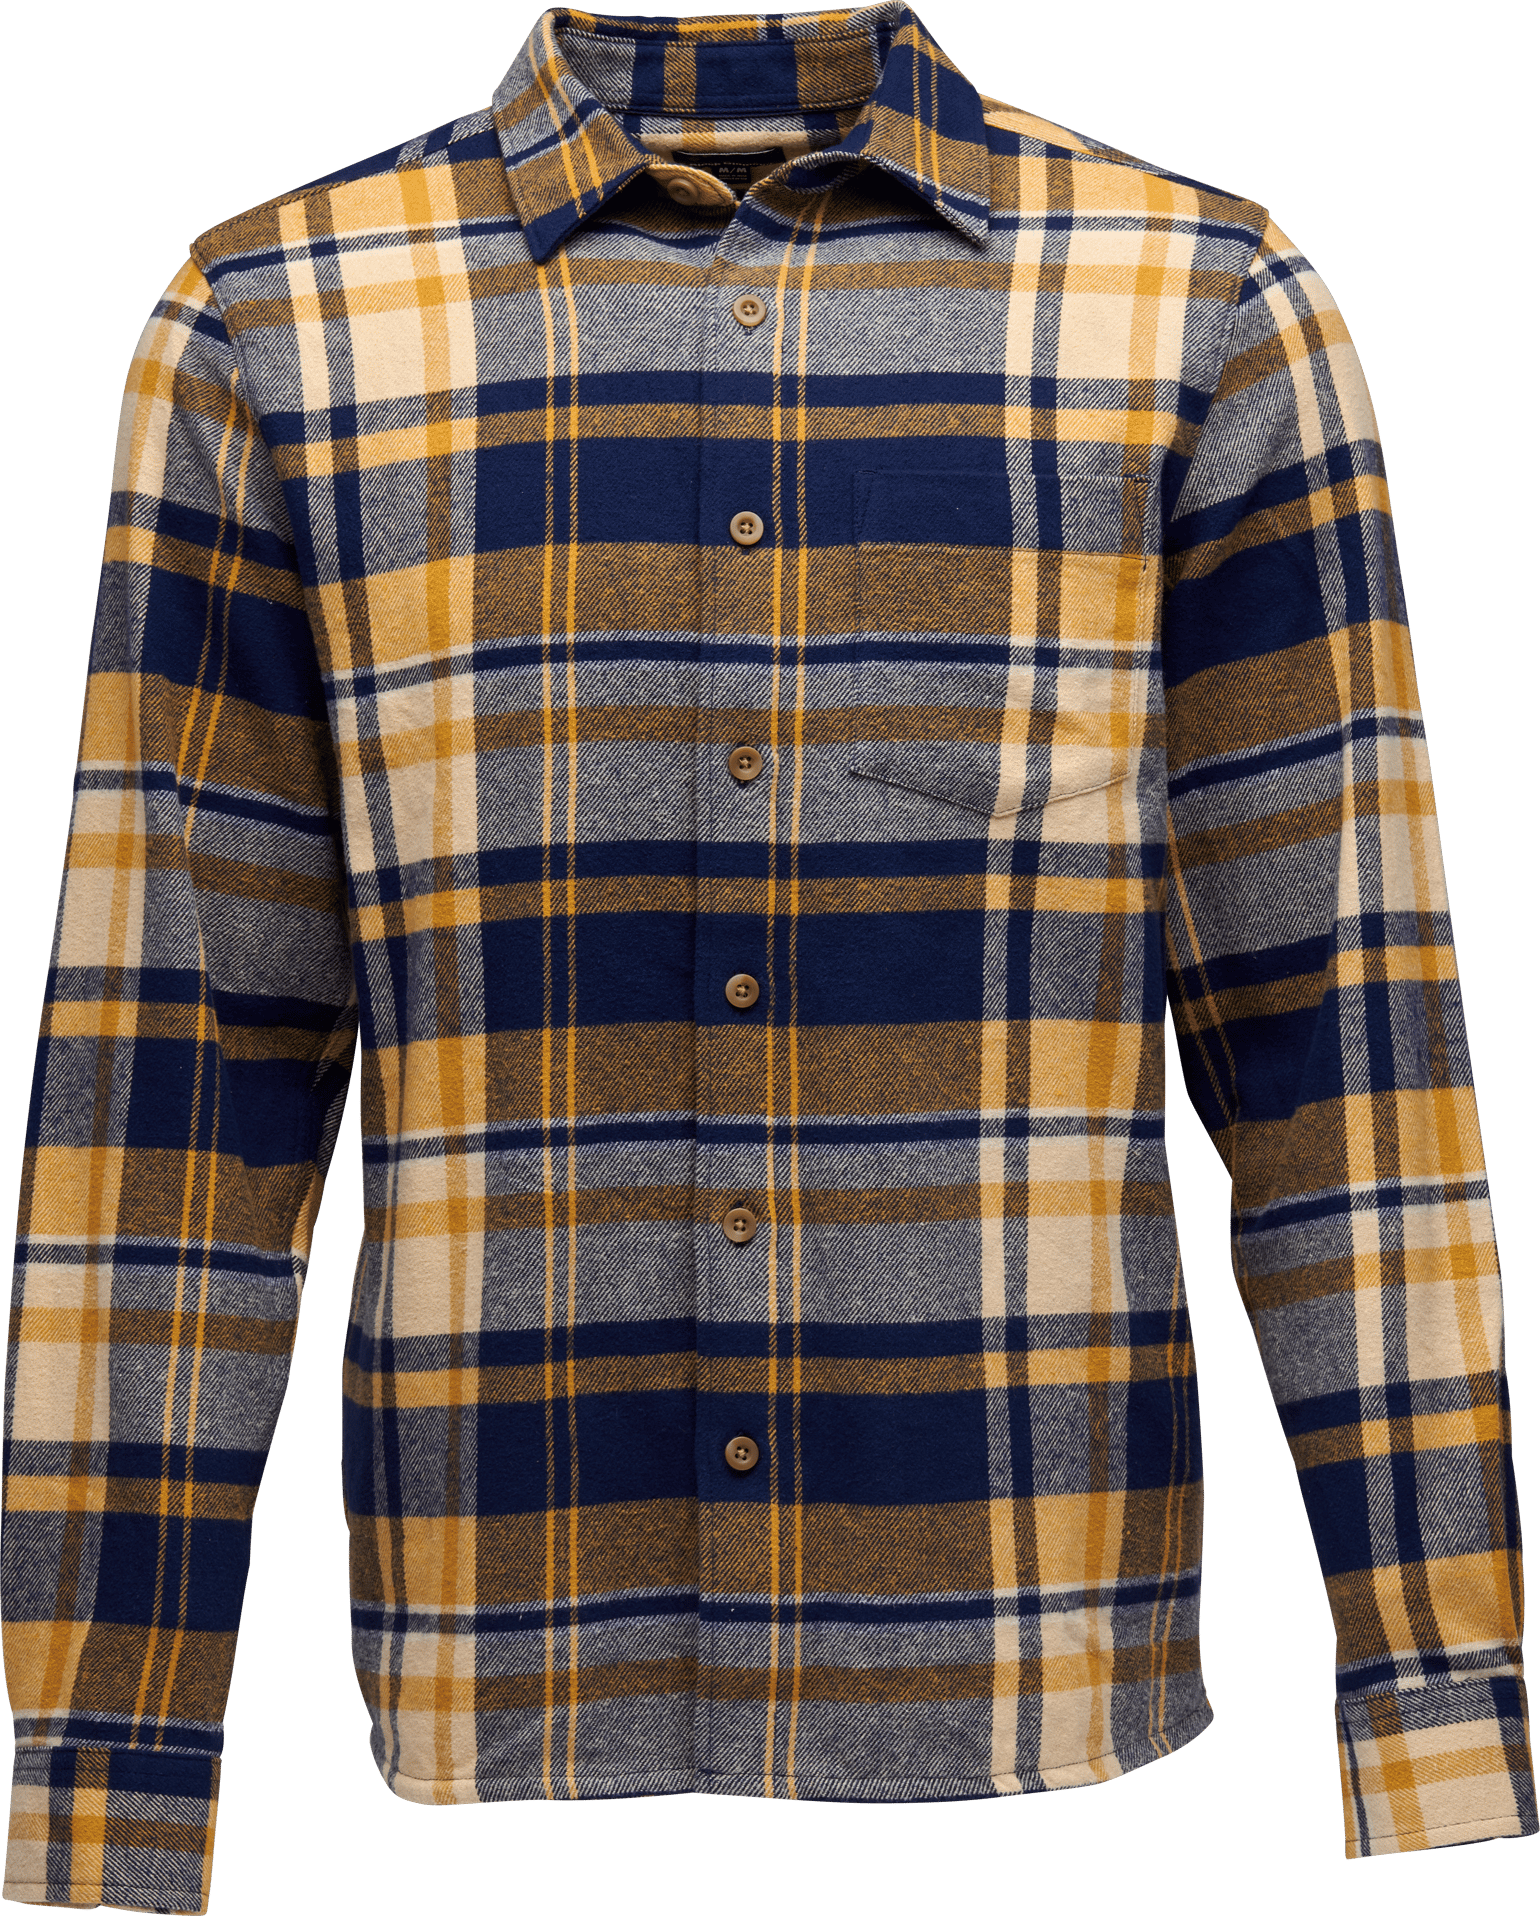 Men's Project Flannel Shirt Indigo-Gold Plaid